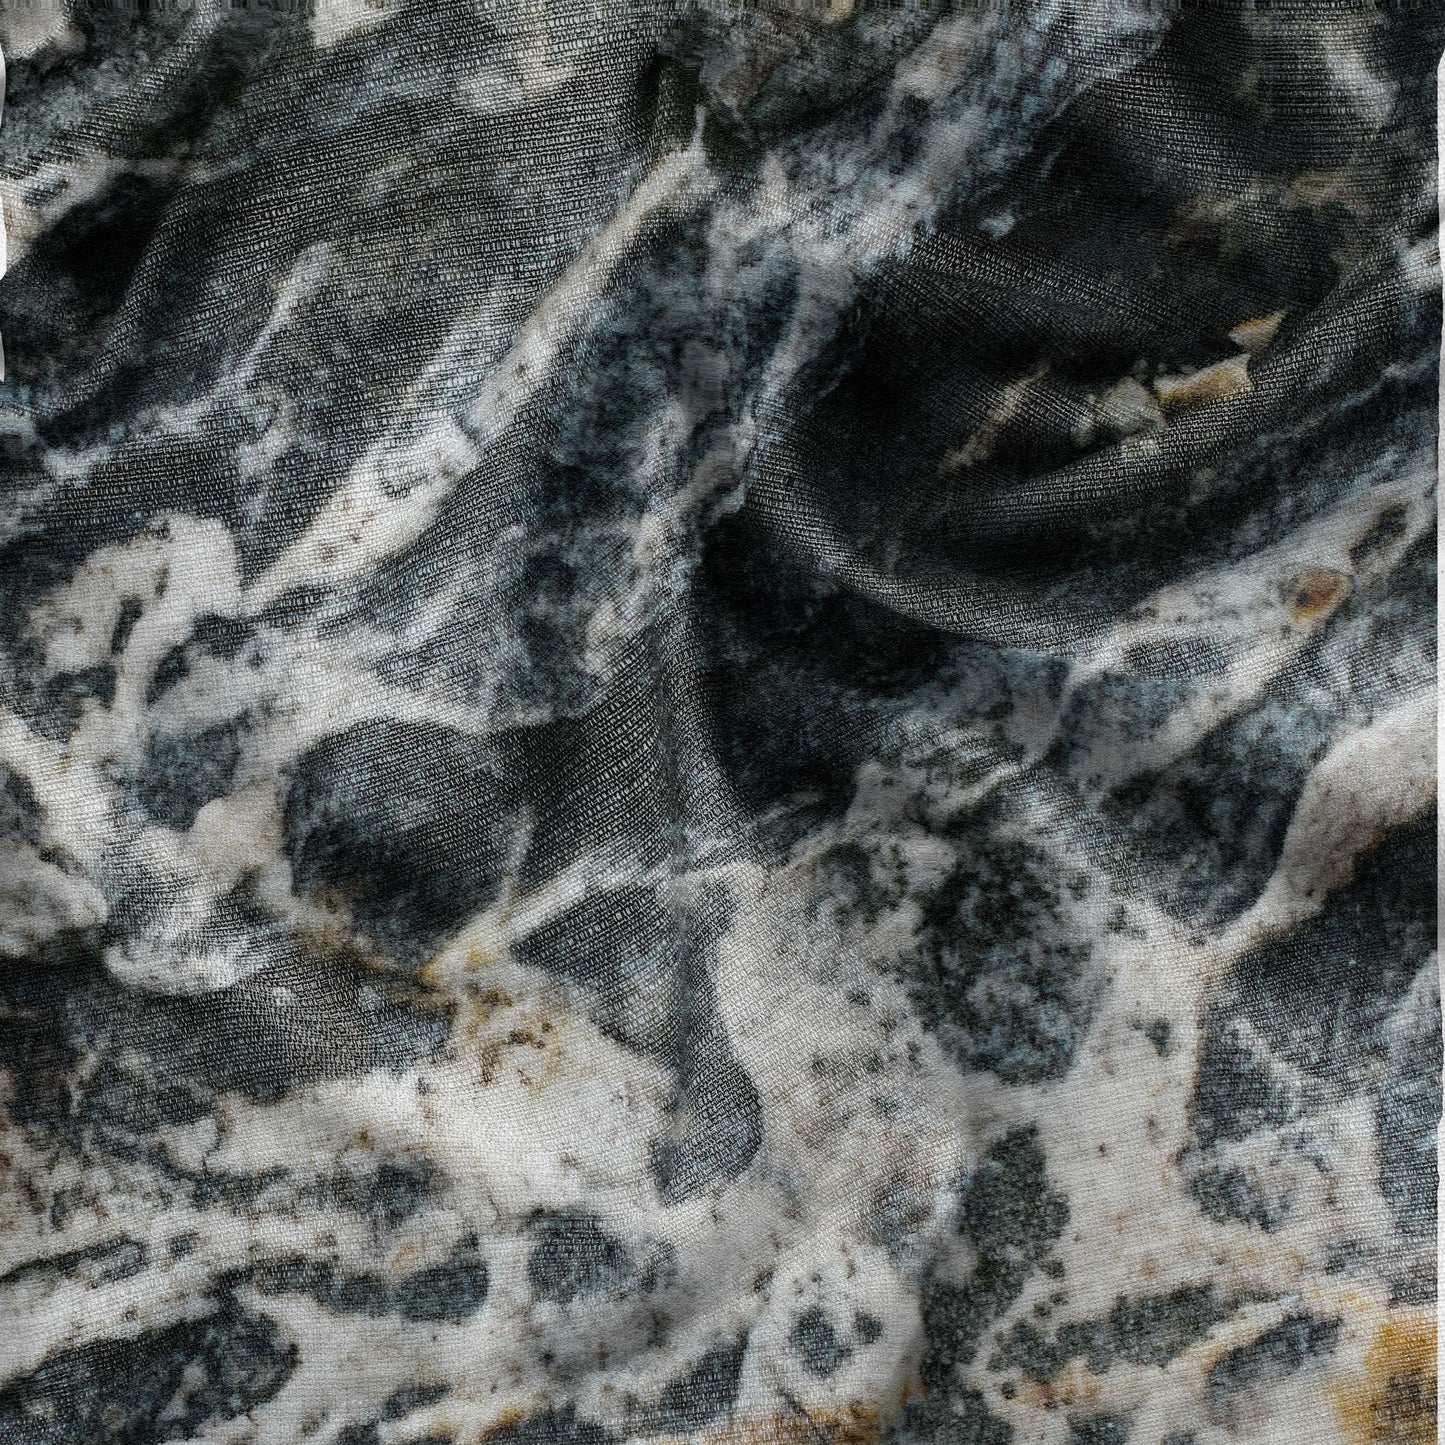 Black Chromite Marble-Stone Cushion Cover Trendy Home